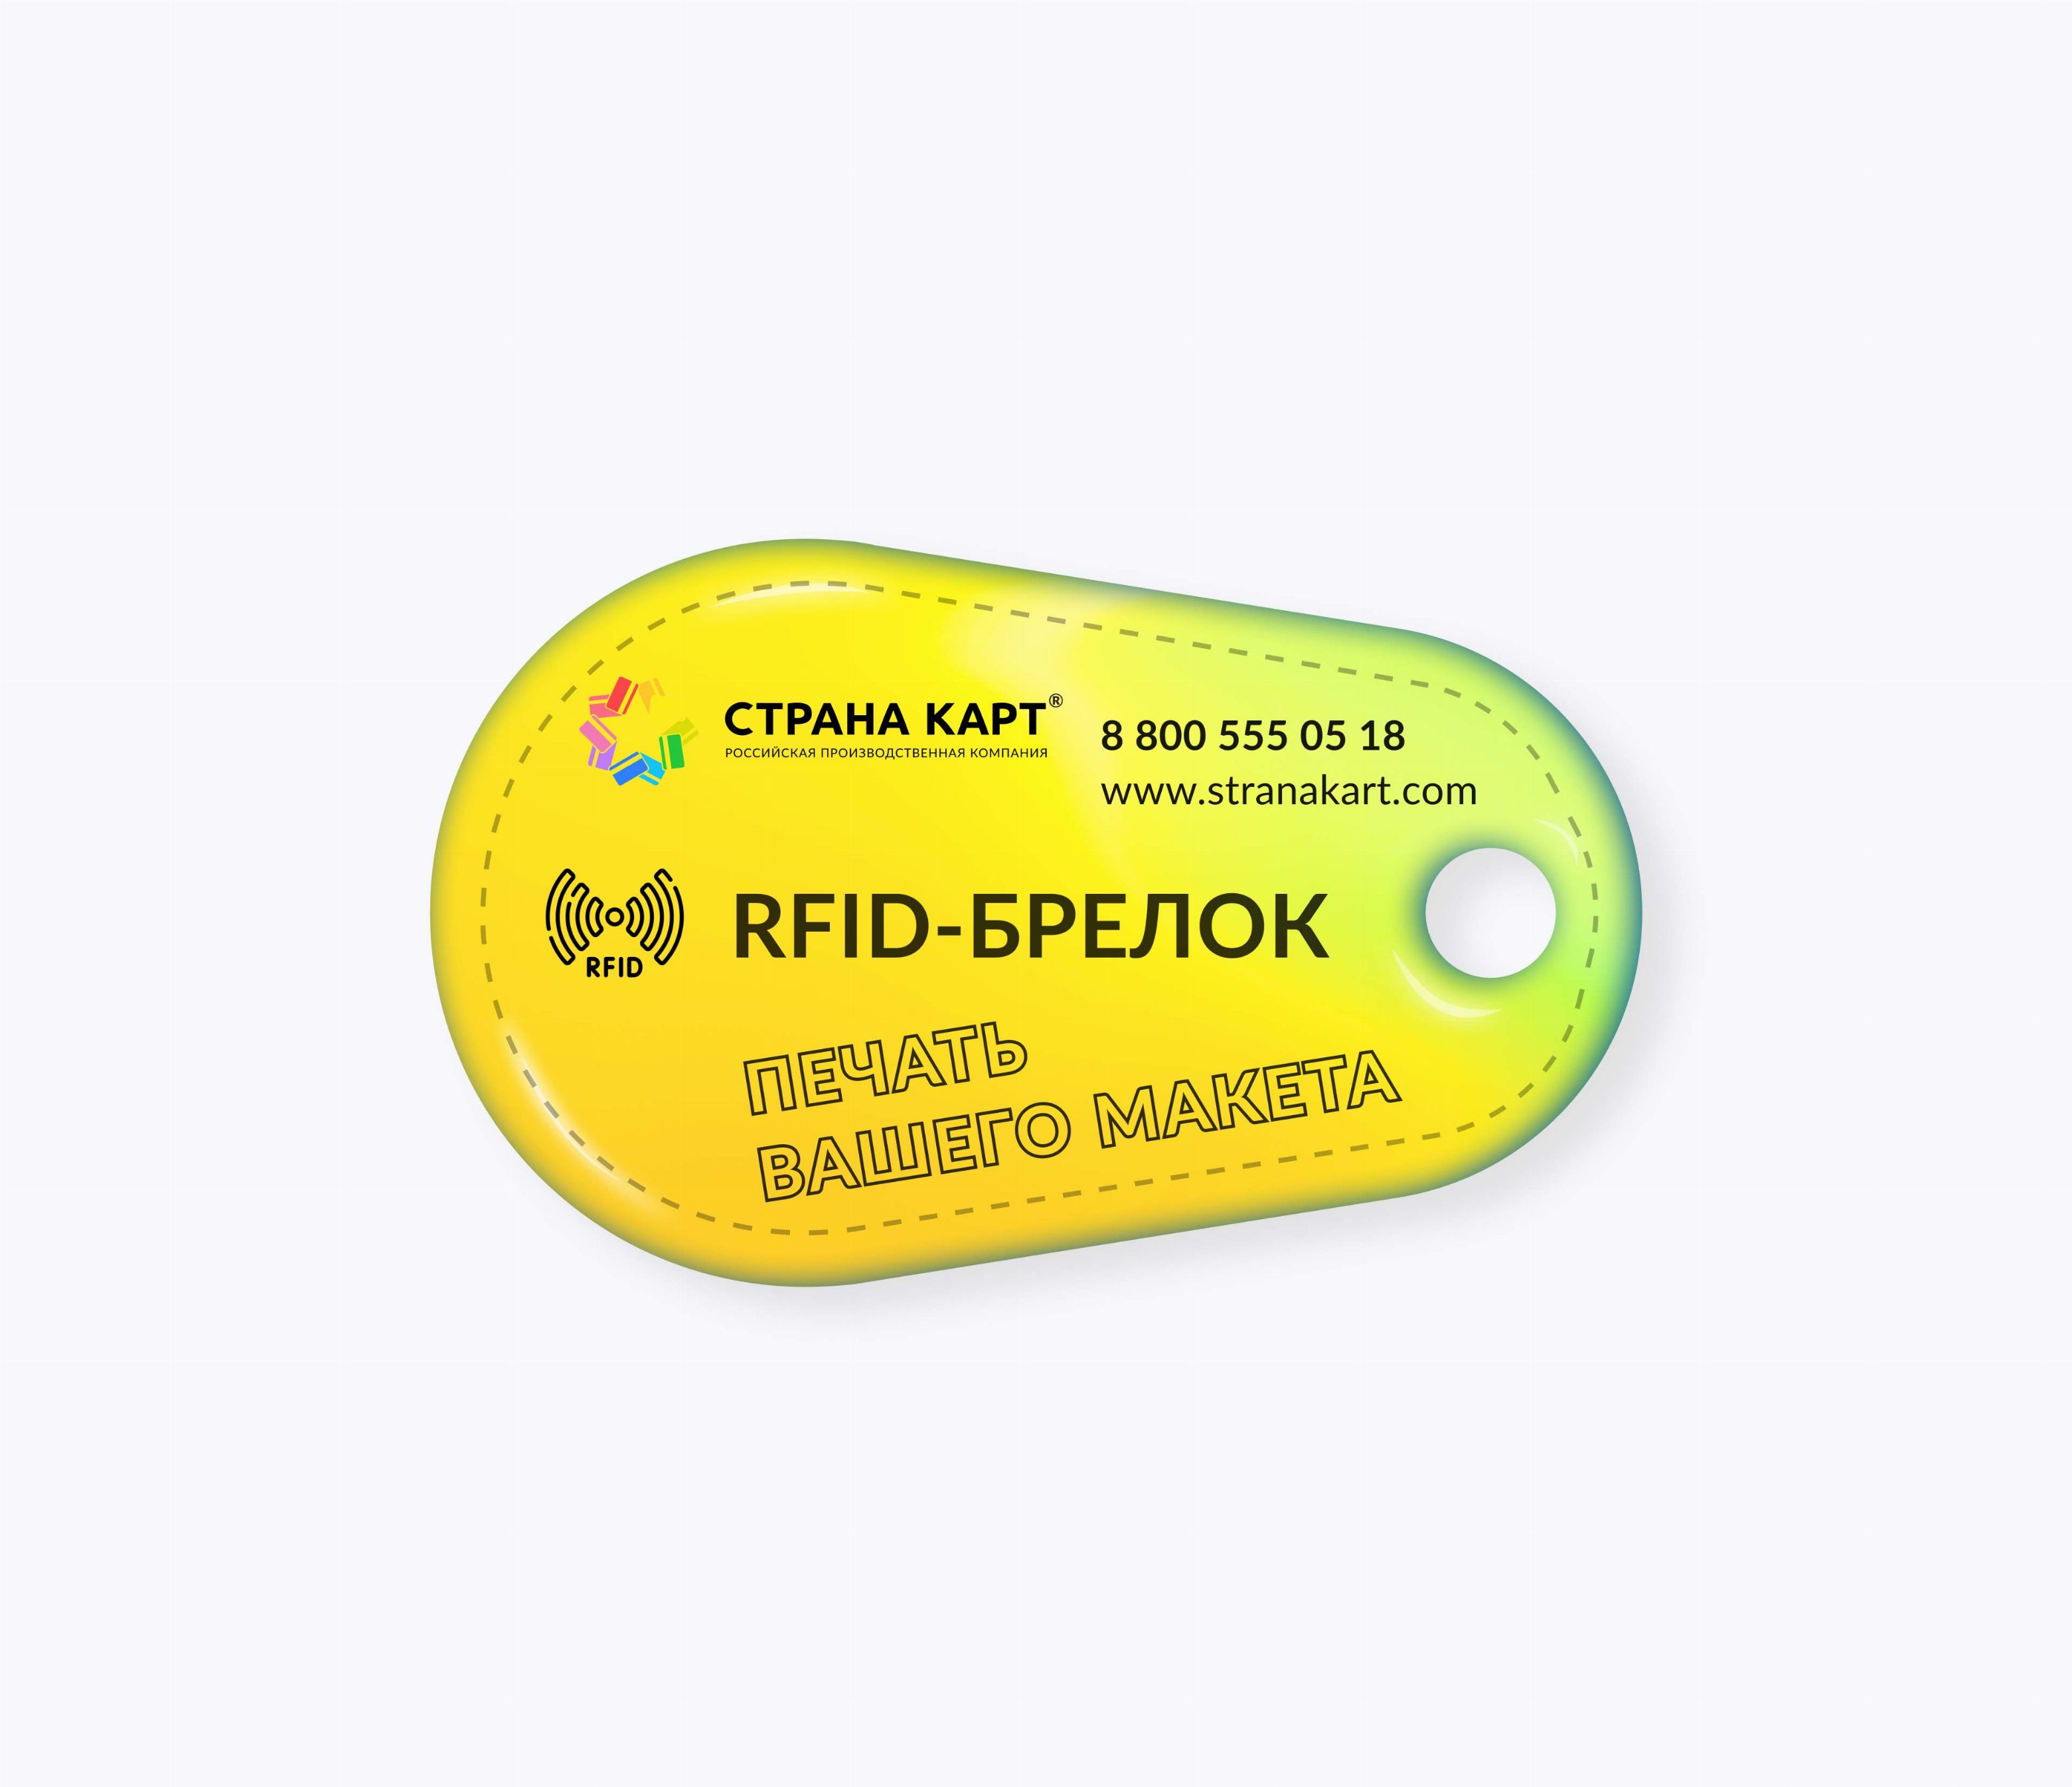 Каплевидные RFID-брелоки NEOKEY® с чипом SMARTTAG® 4k 4 byte nUID RFID-брелоки NEOKEY® с чипом SMARTTAG® 4k 4 byte nUID и вашим логотипом